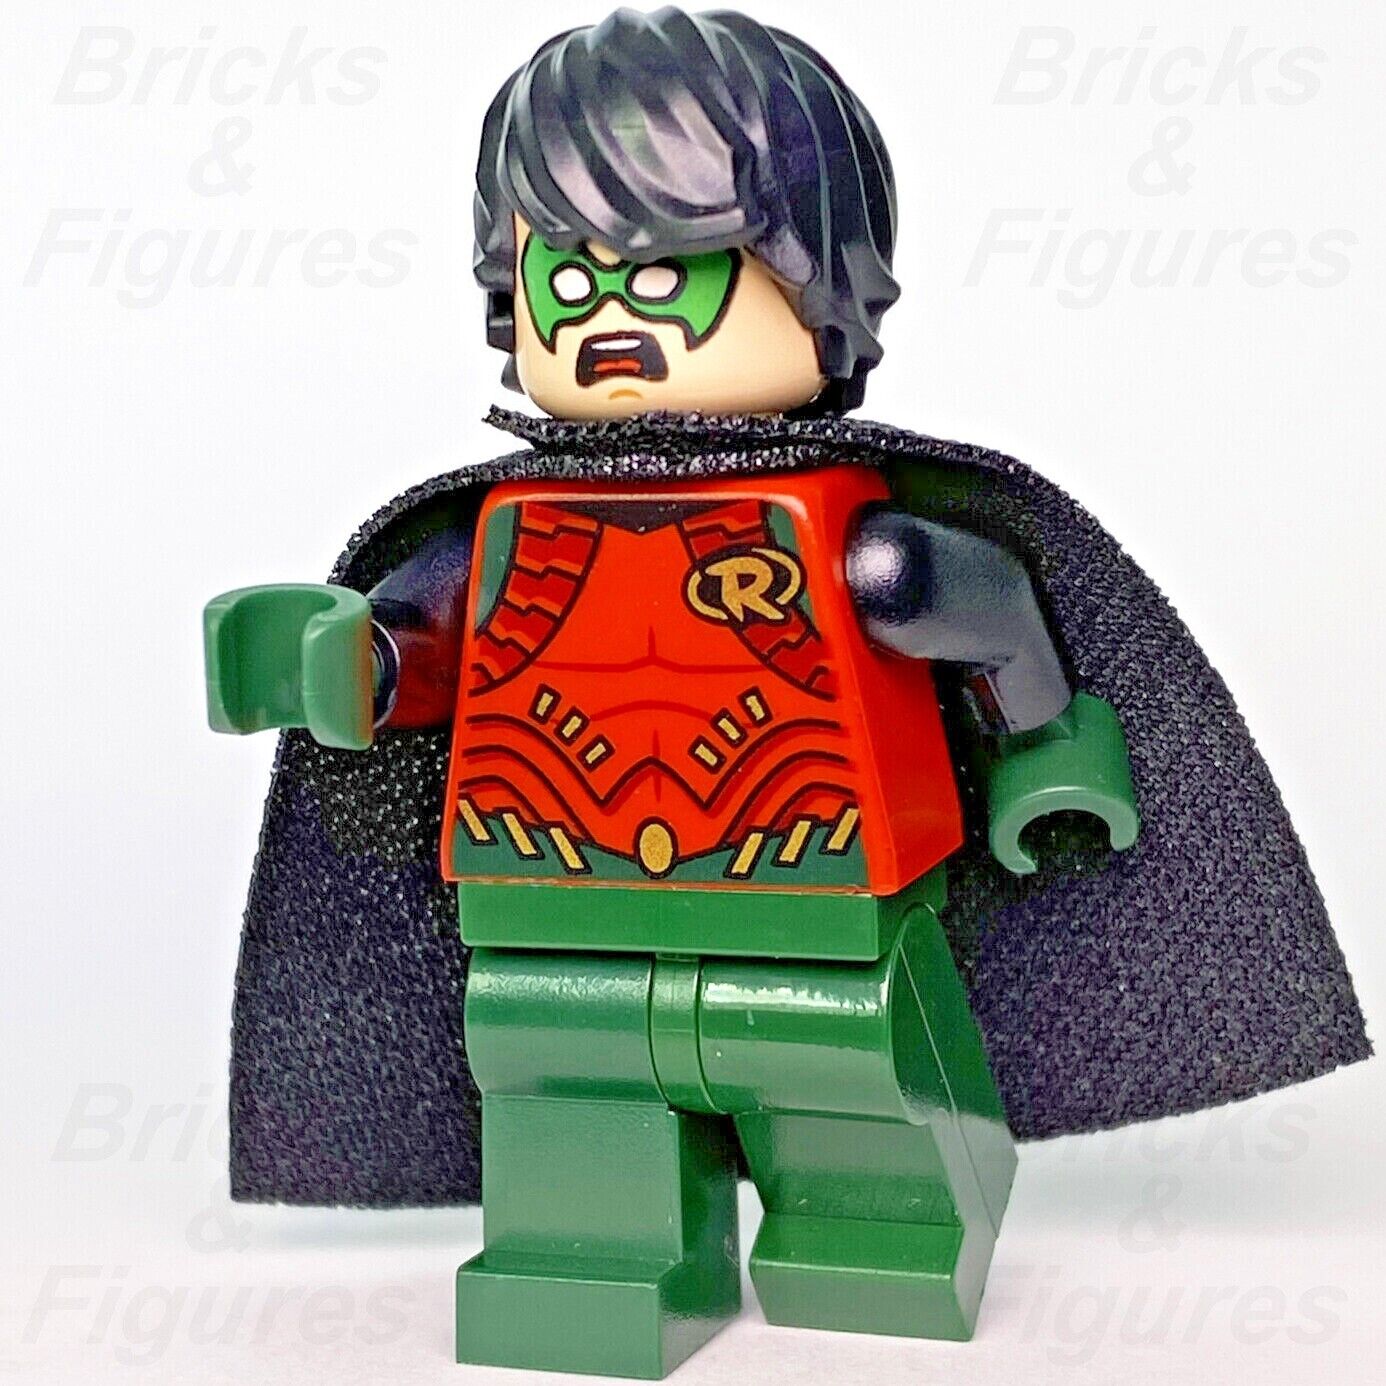 Super héros - Minifigs BLOG Bricks